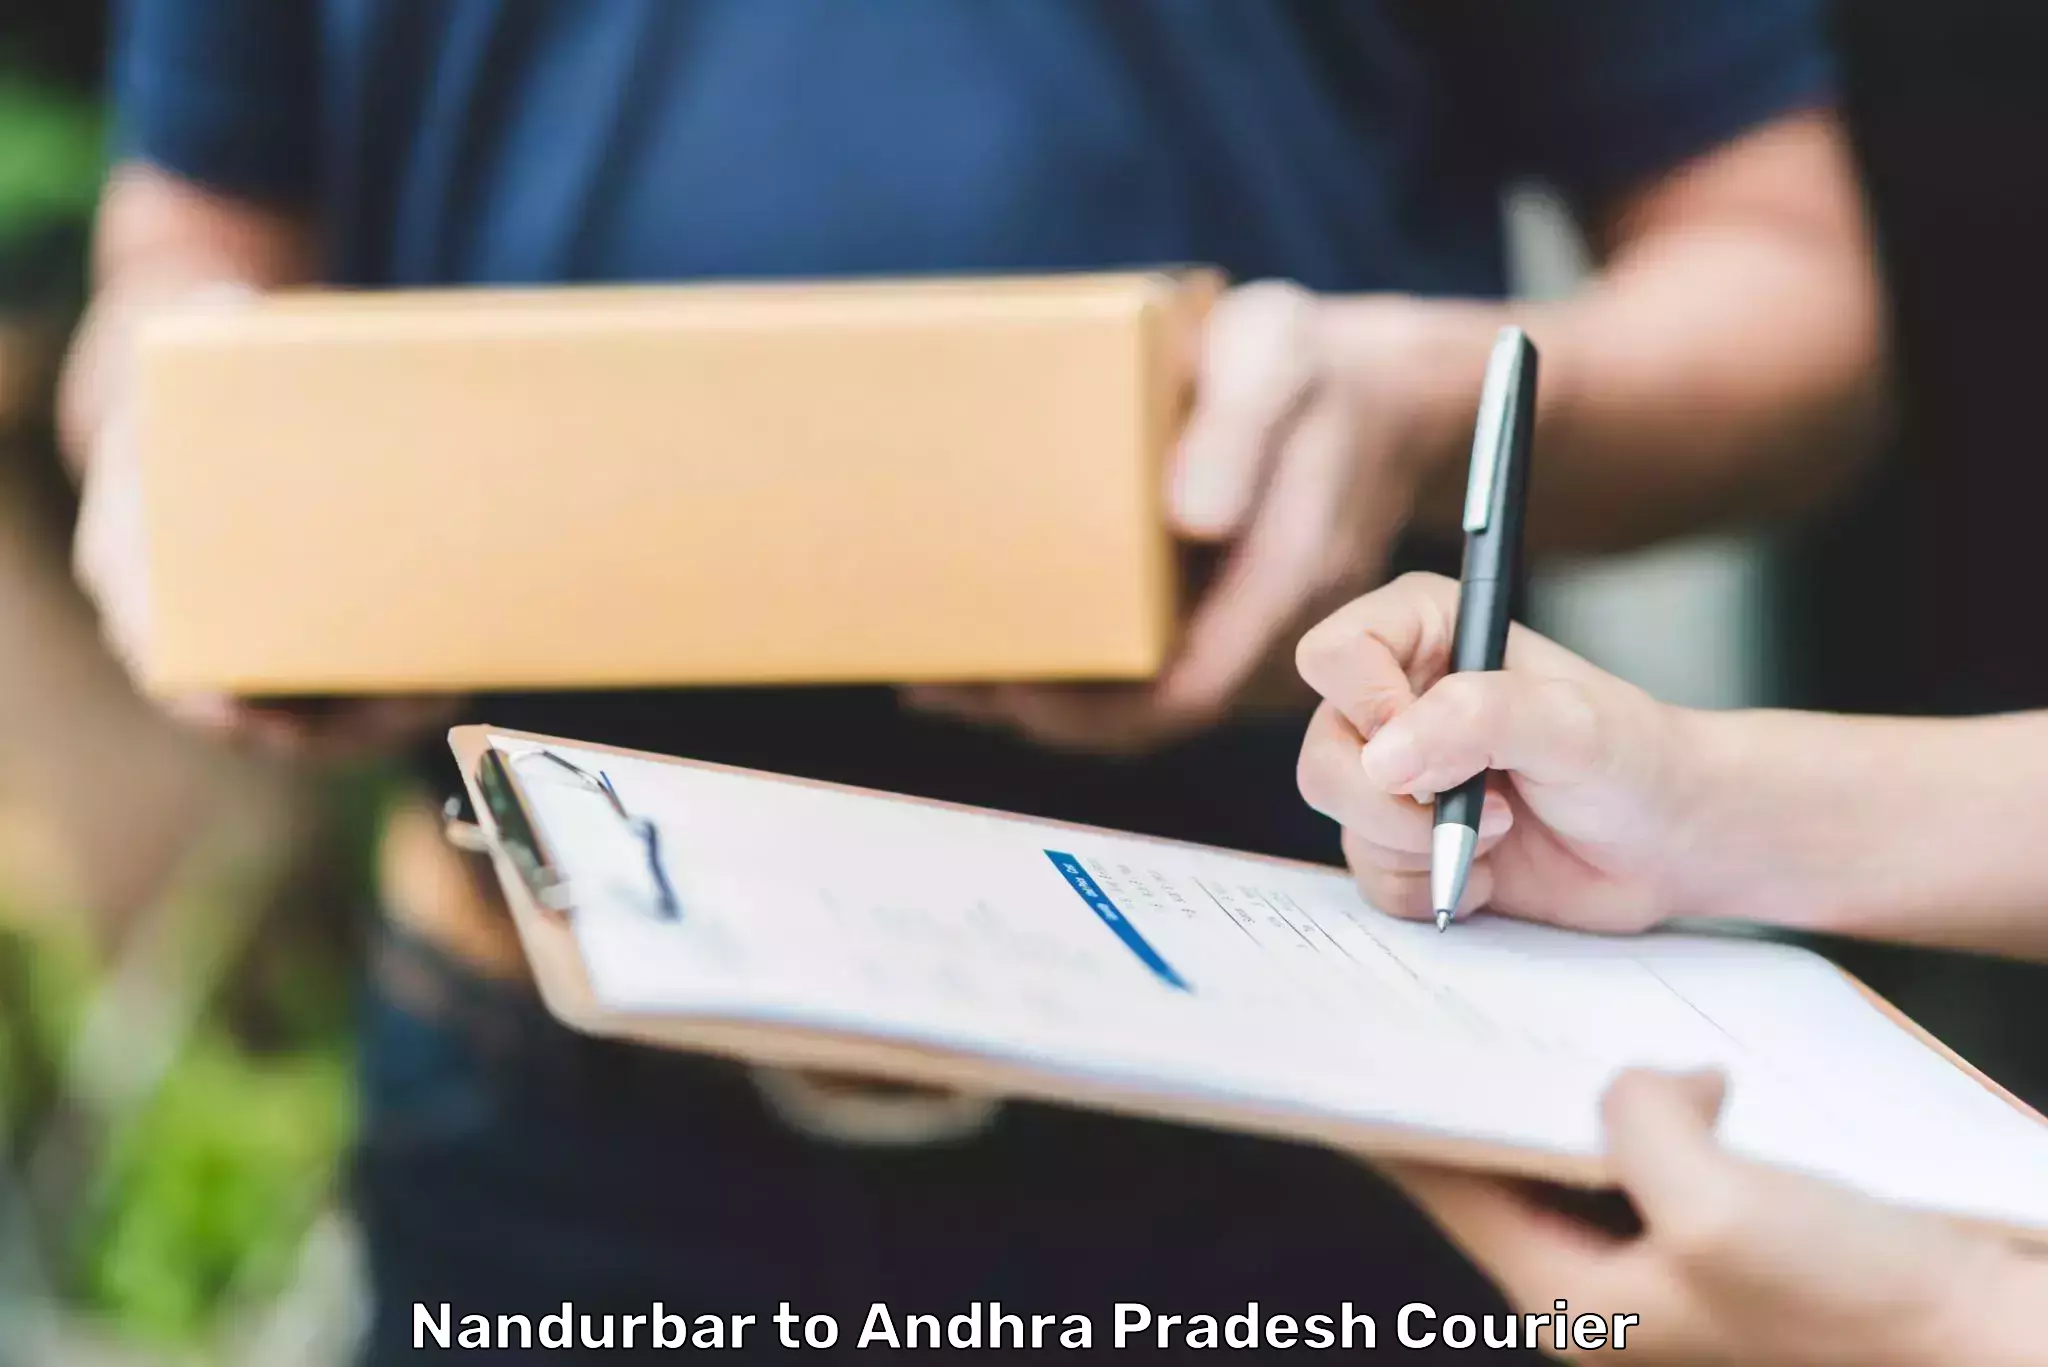 On-call courier service Nandurbar to Gajapathinagaram